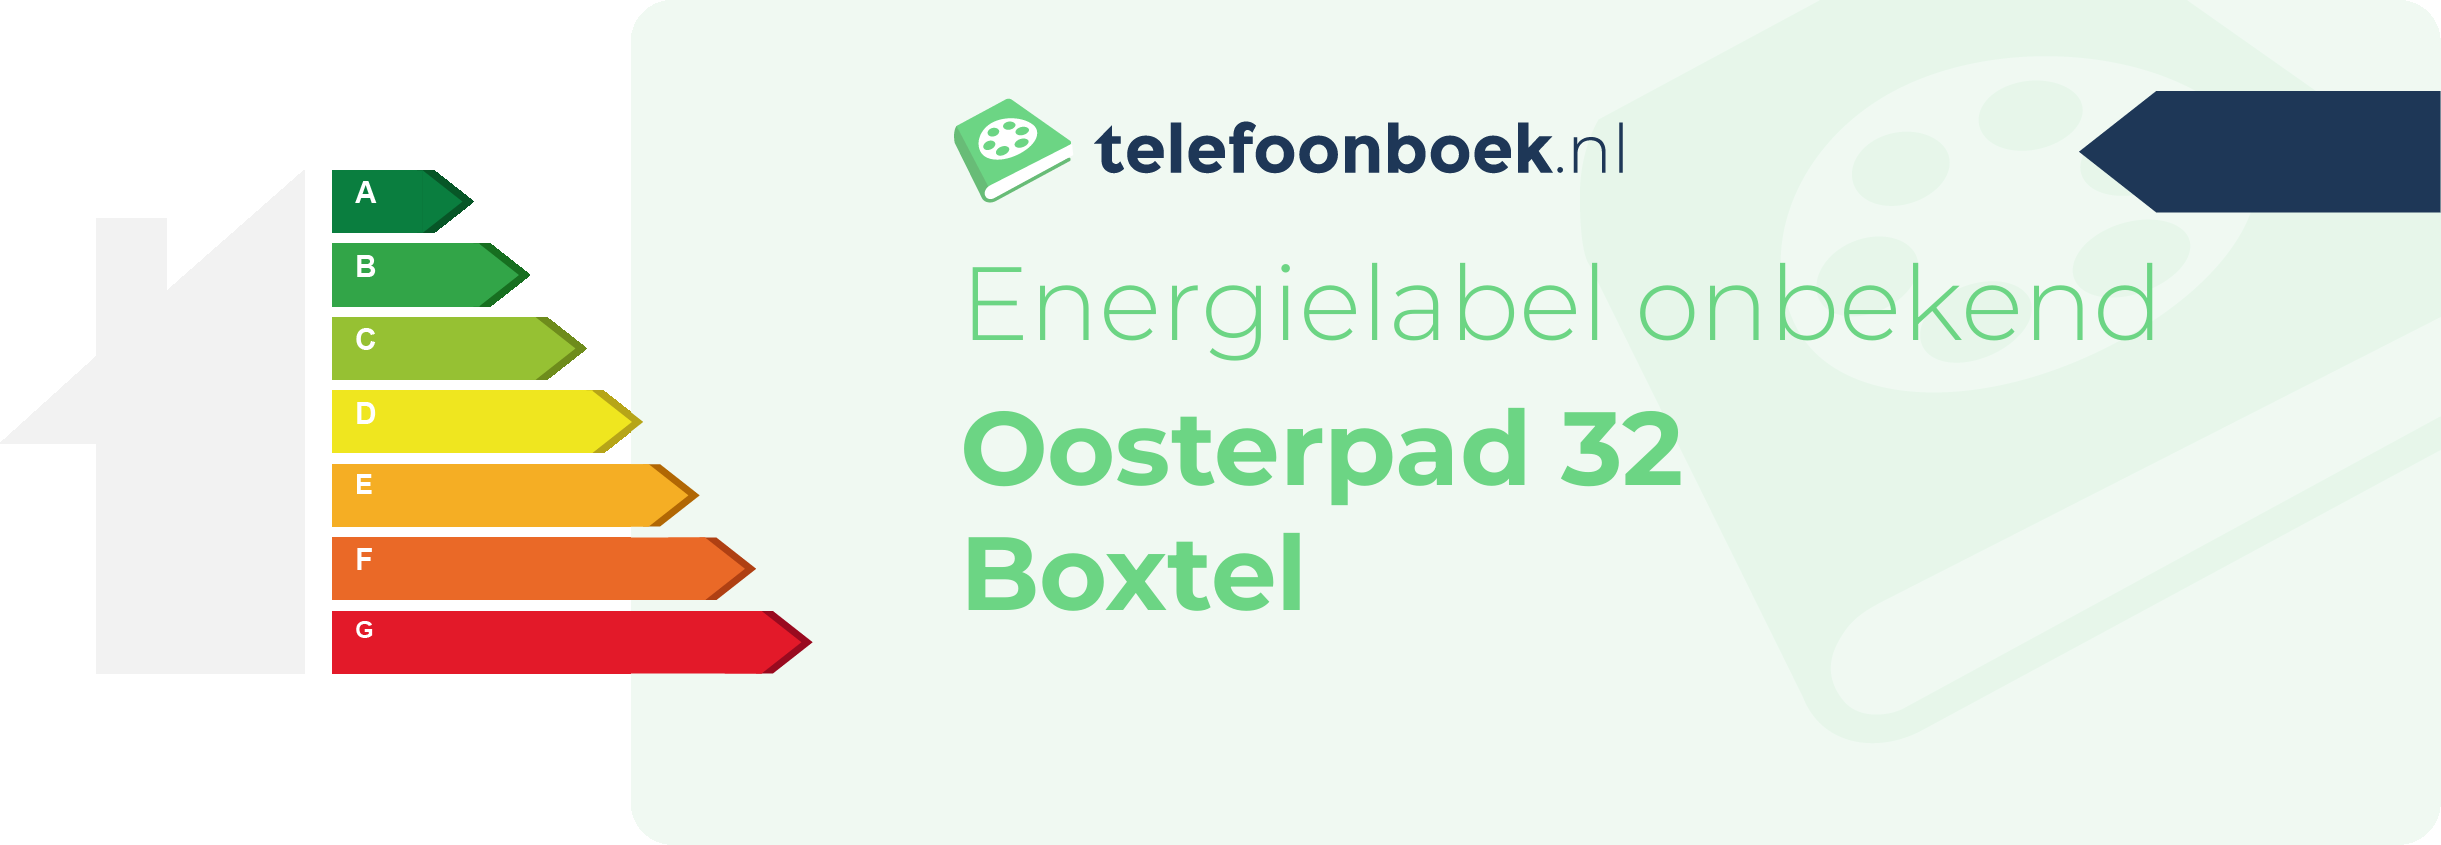 Energielabel Oosterpad 32 Boxtel